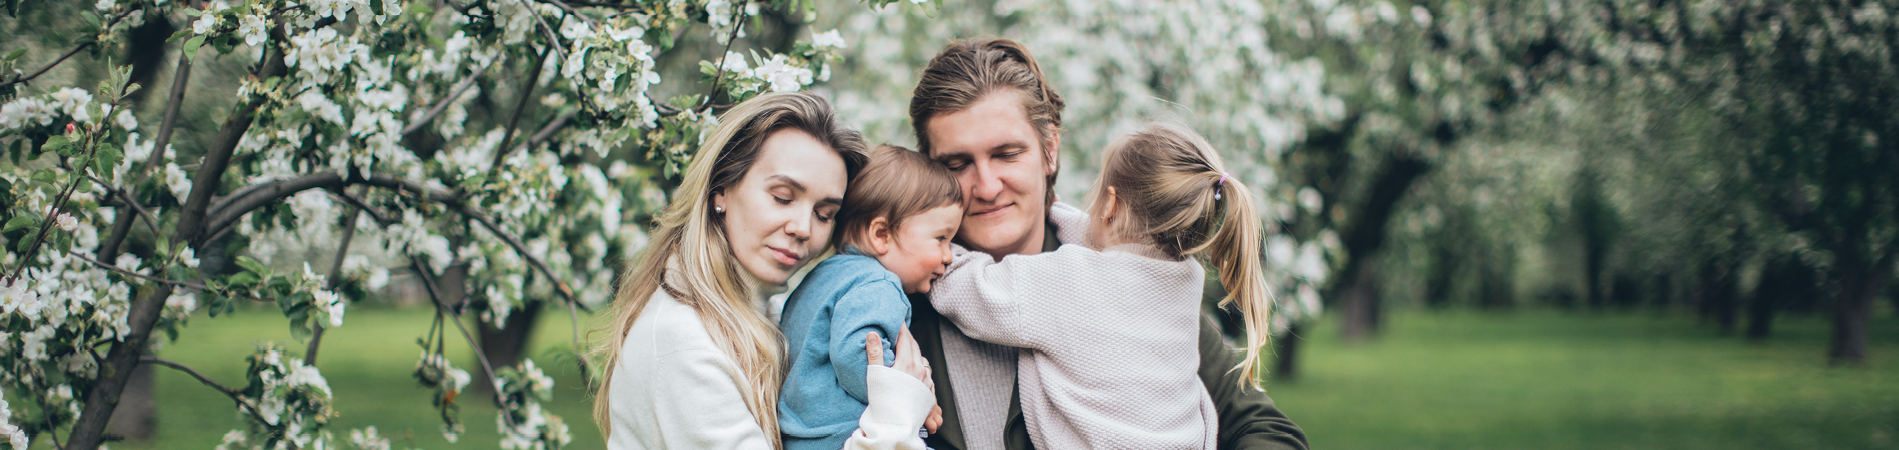 Life Insurance In Spokane Washington - Family of four hugging each other